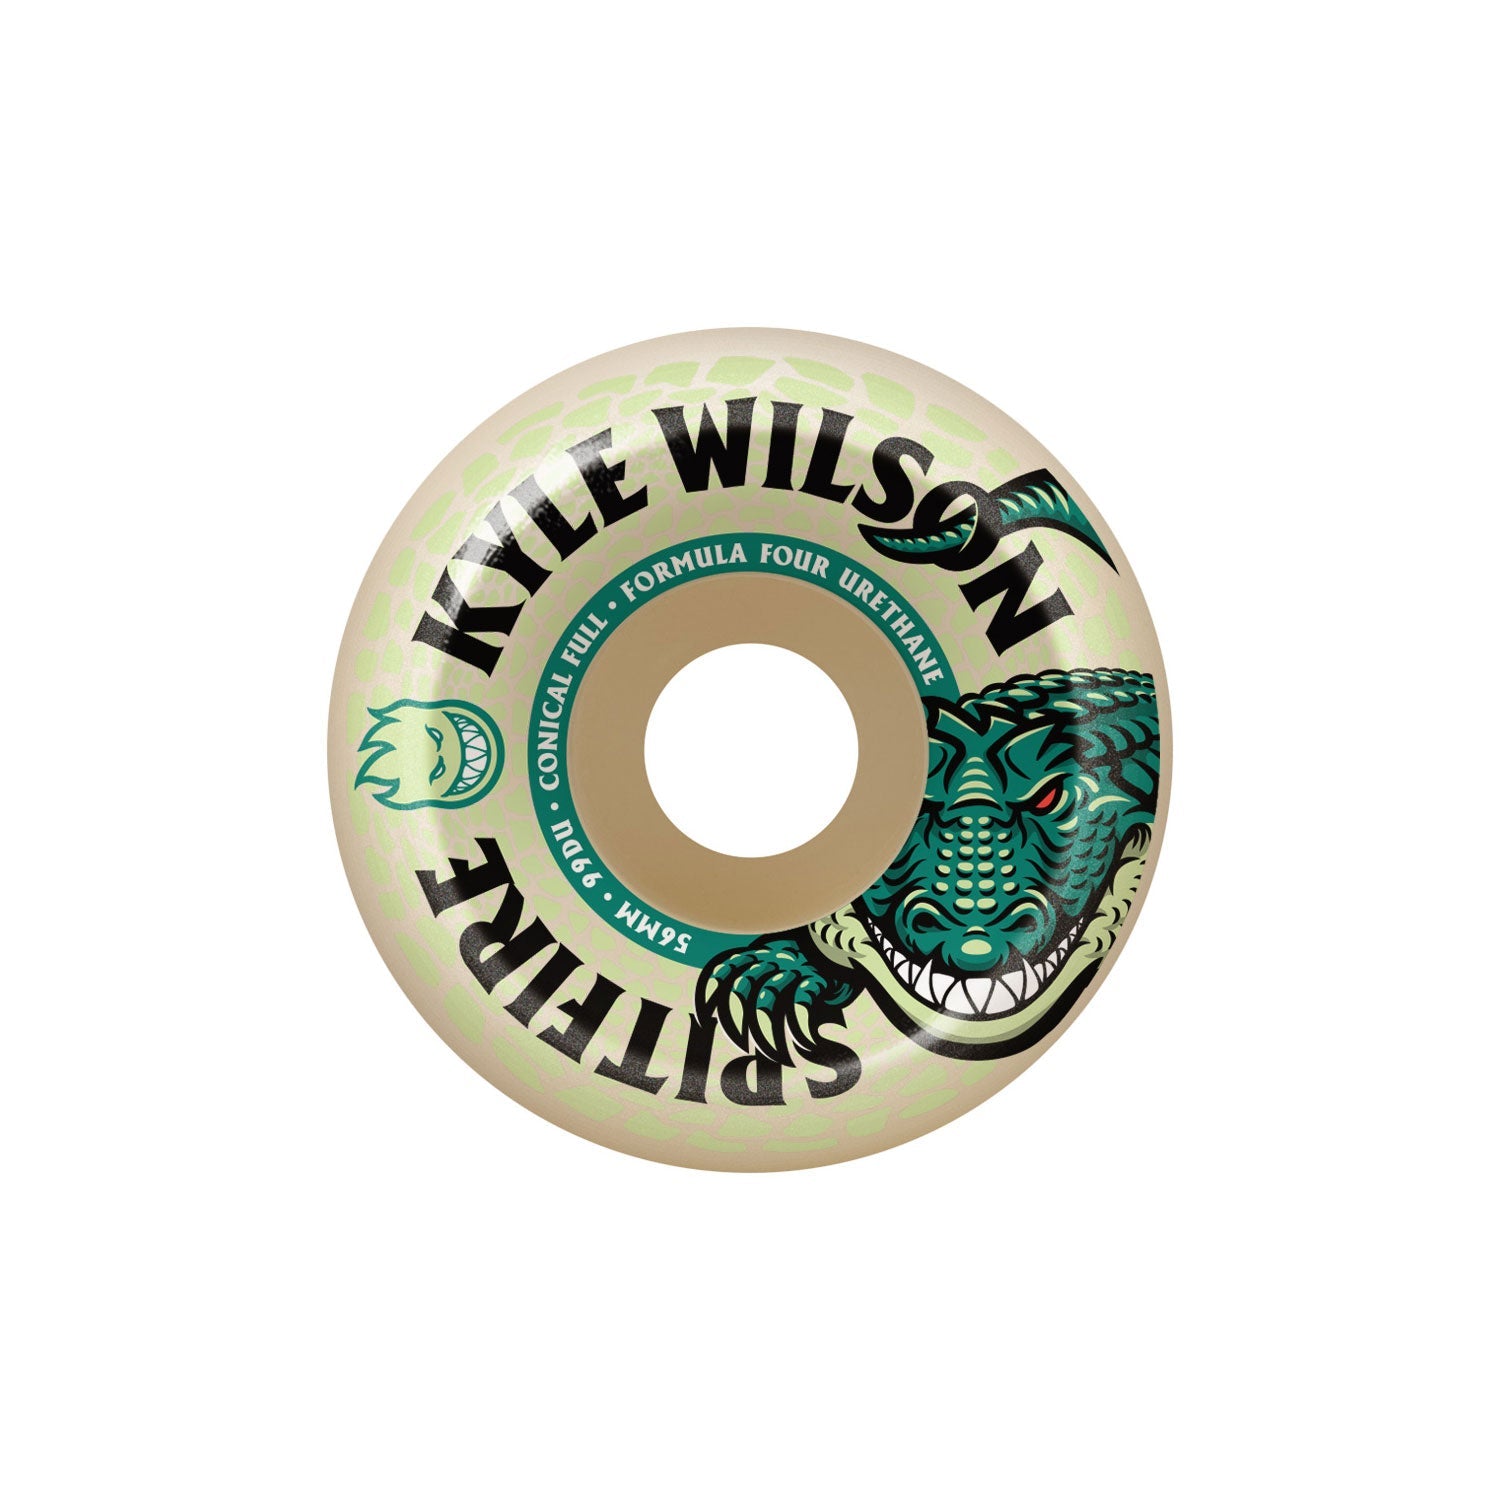 Spitfire Kyle Wilson Death Roll Conical Full F499 wheels (56mm) - Tiki Room Skateboards - 1